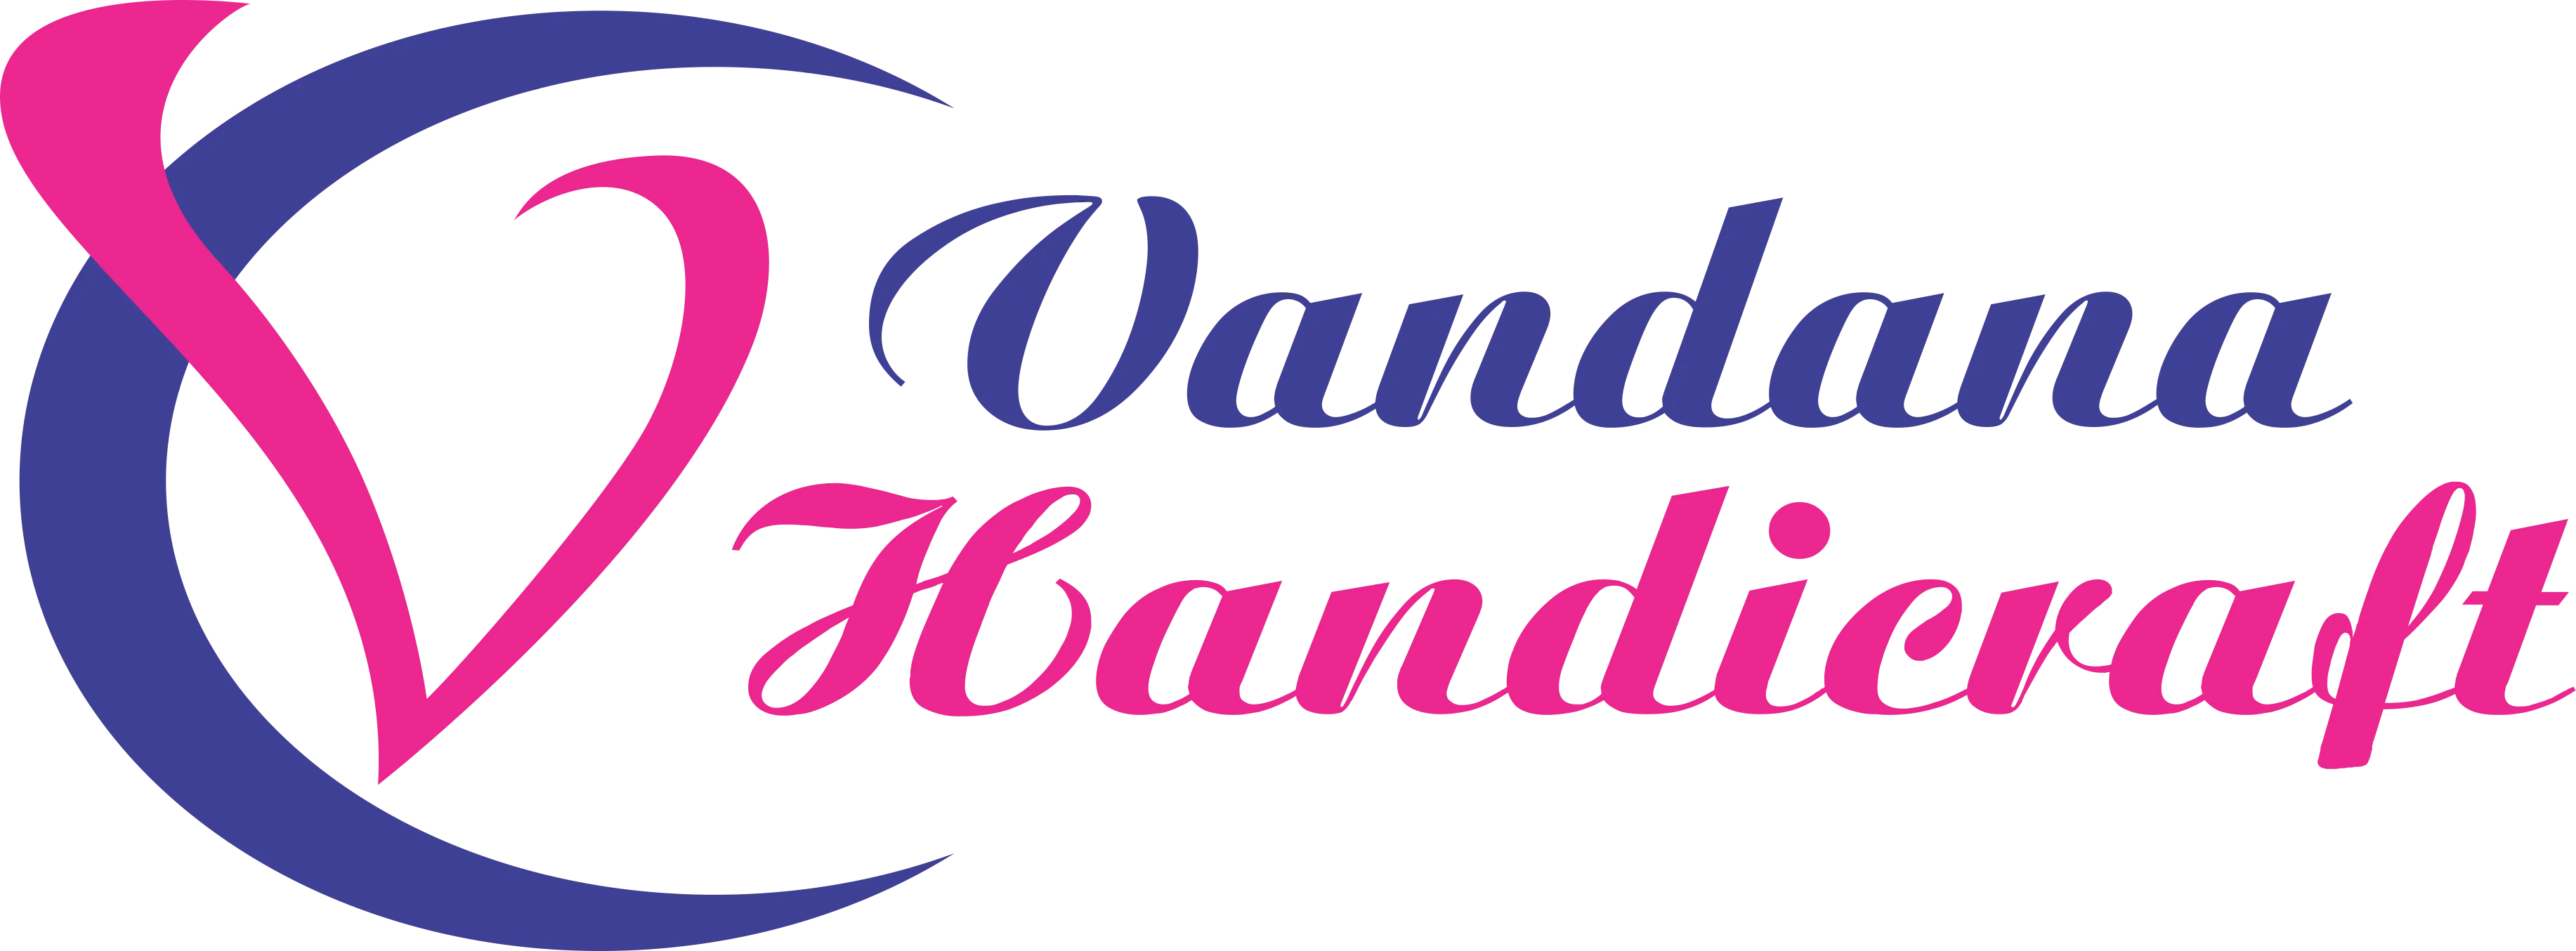 Handicraft logo Vectors & Illustrations for Free Download | Freepik